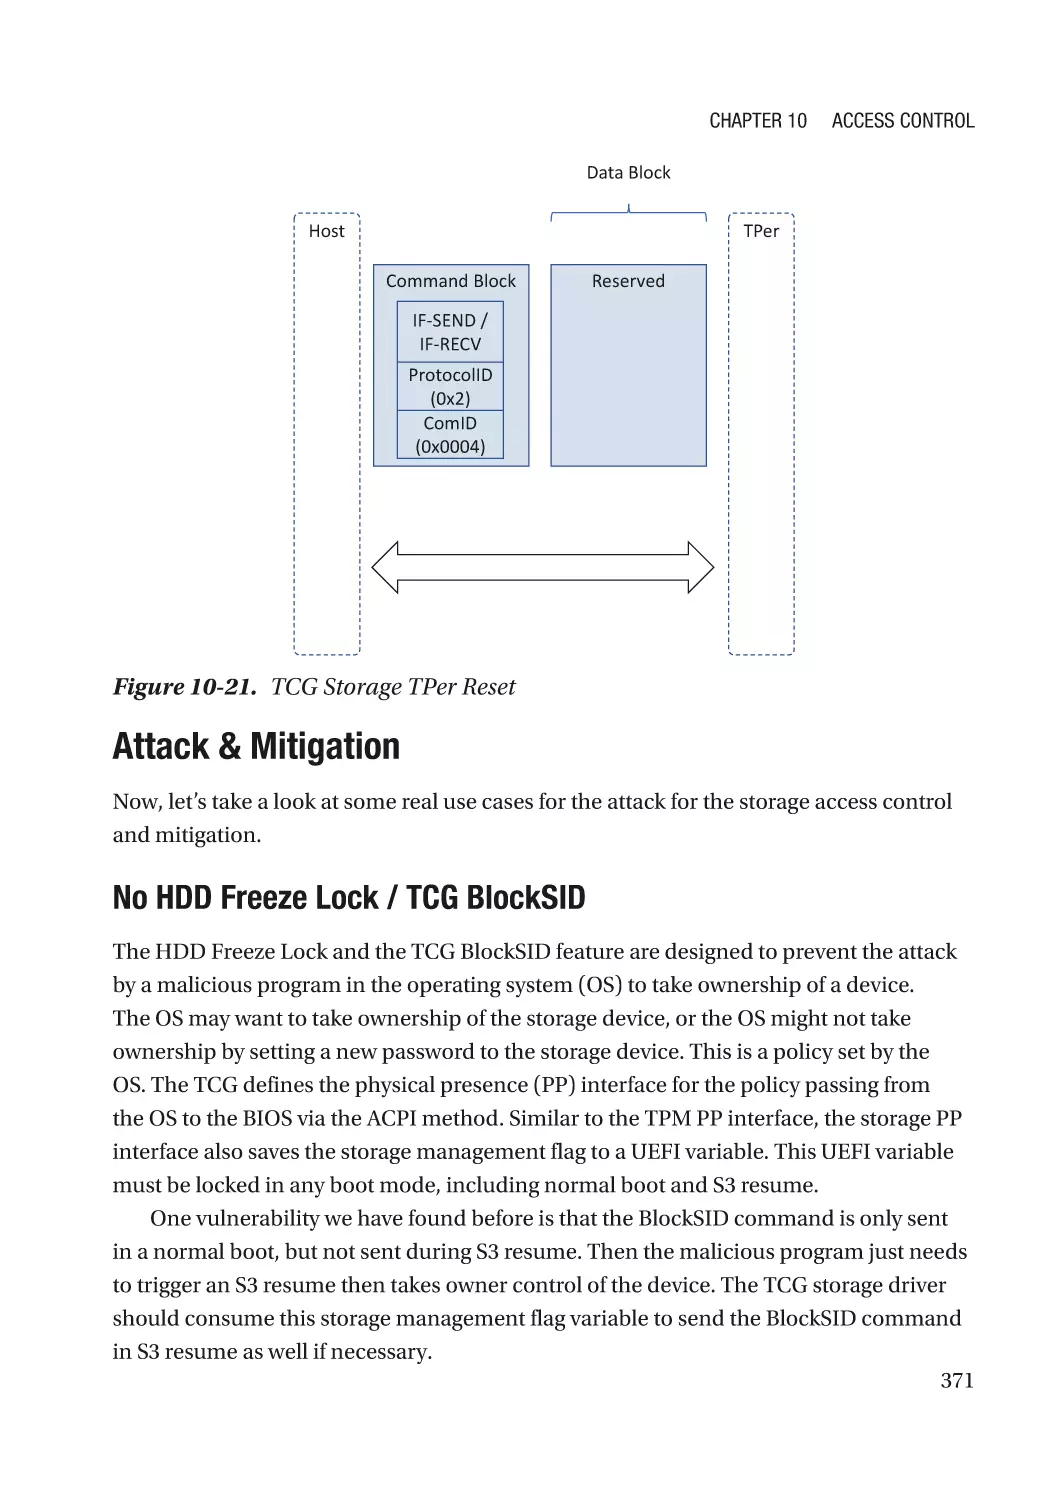 Attack & Mitigation
No HDD Freeze Lock / TCG BlockSID